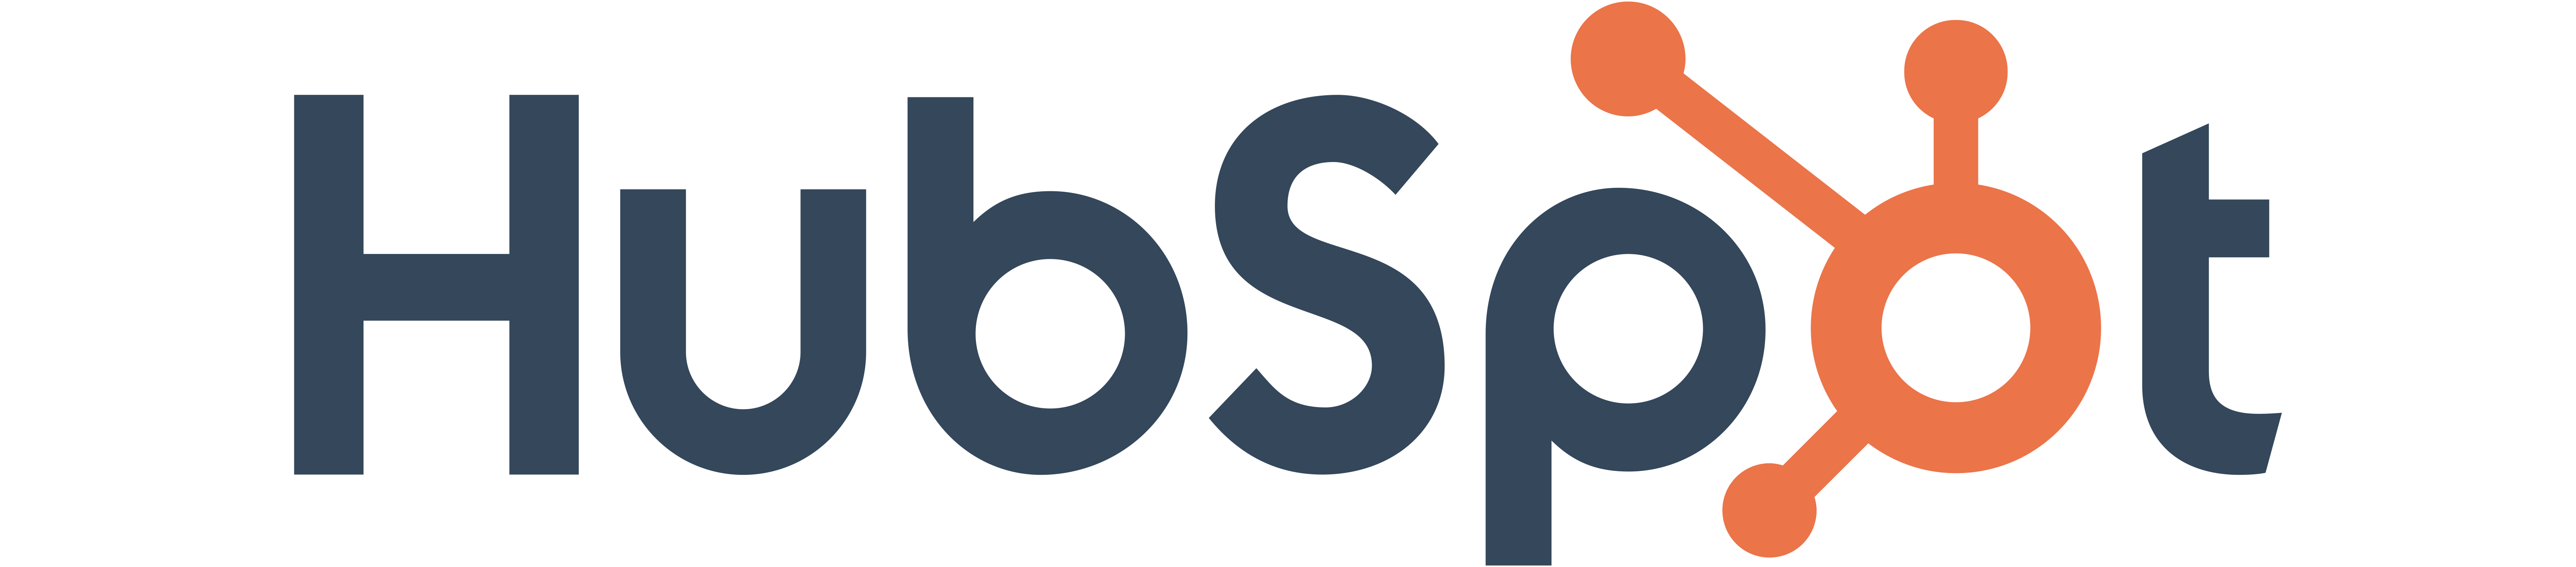 HubSpot Logo Marketing Tools the Pros Use